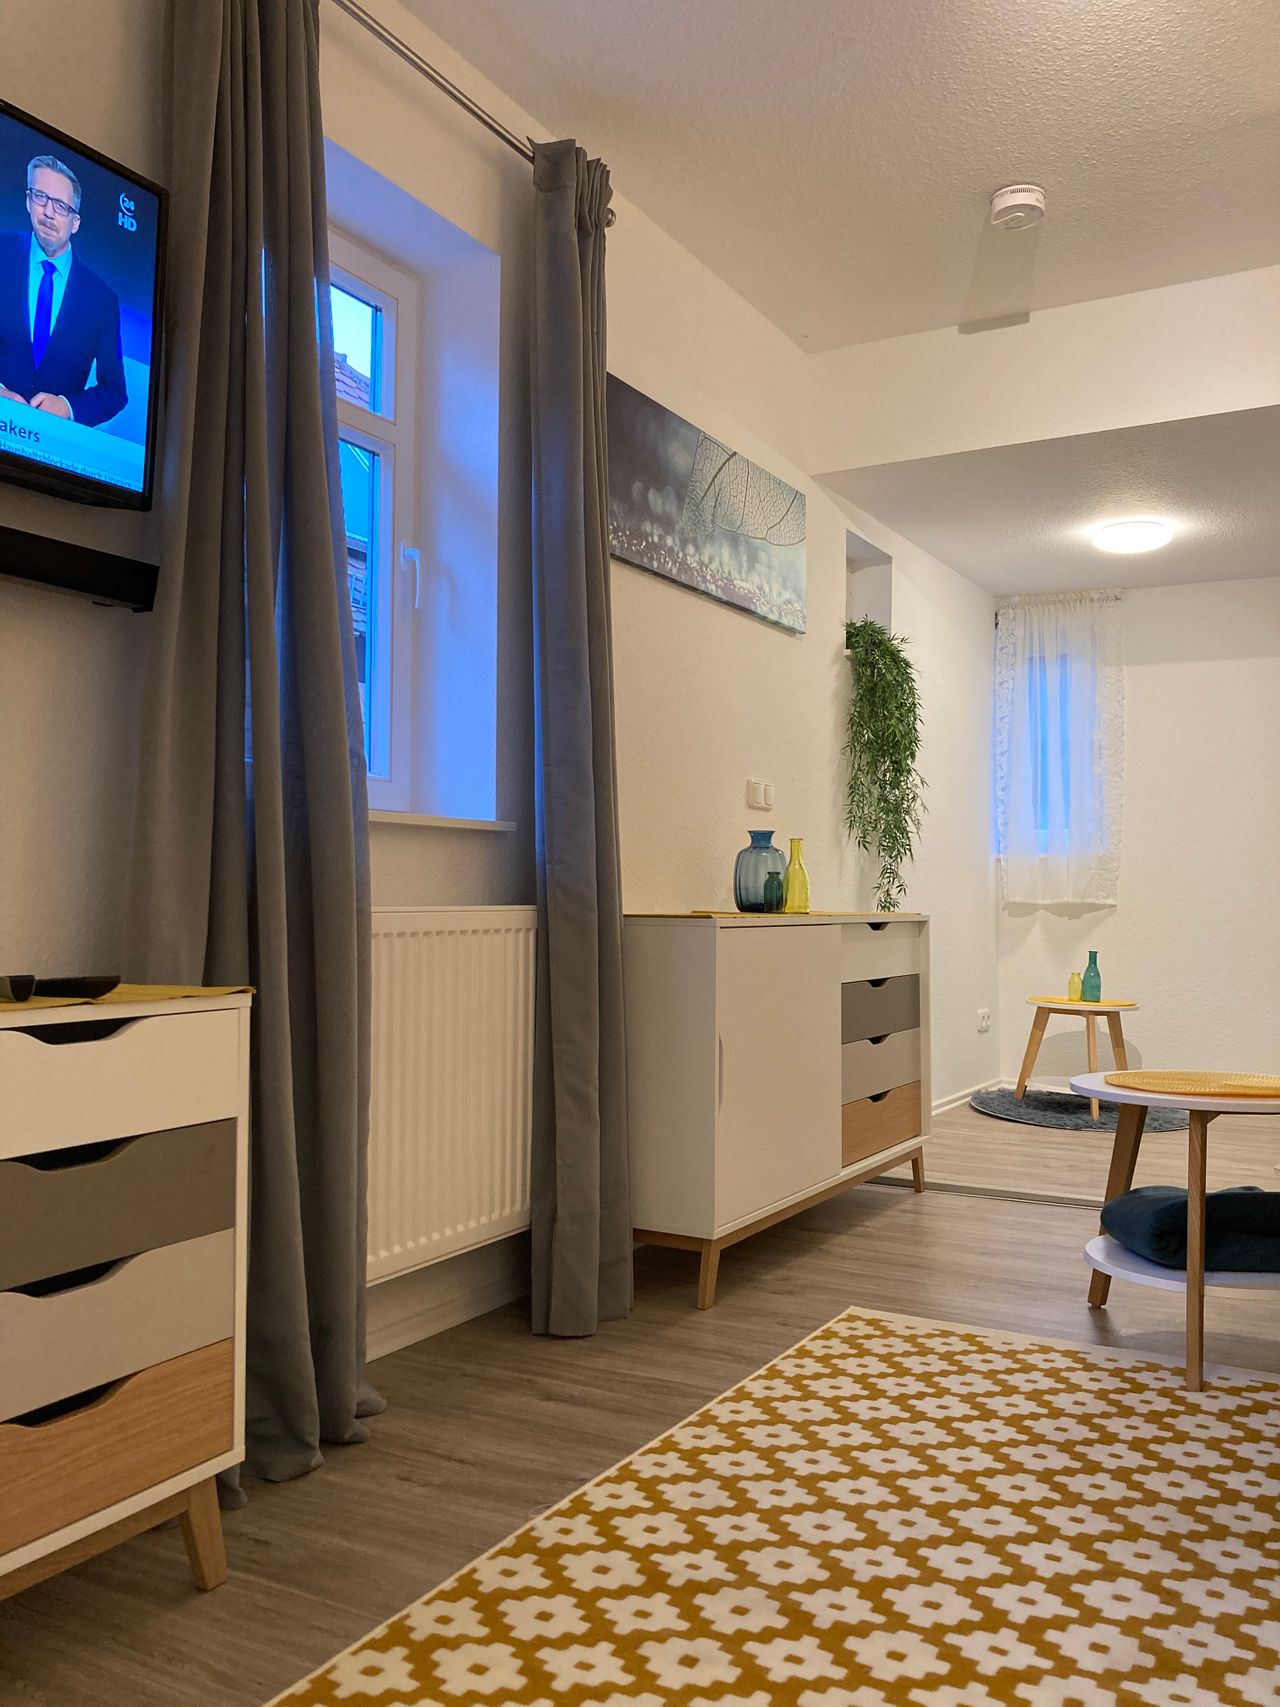 Cozy 2-room flat, well connected, in Frankfurt's green suburbs